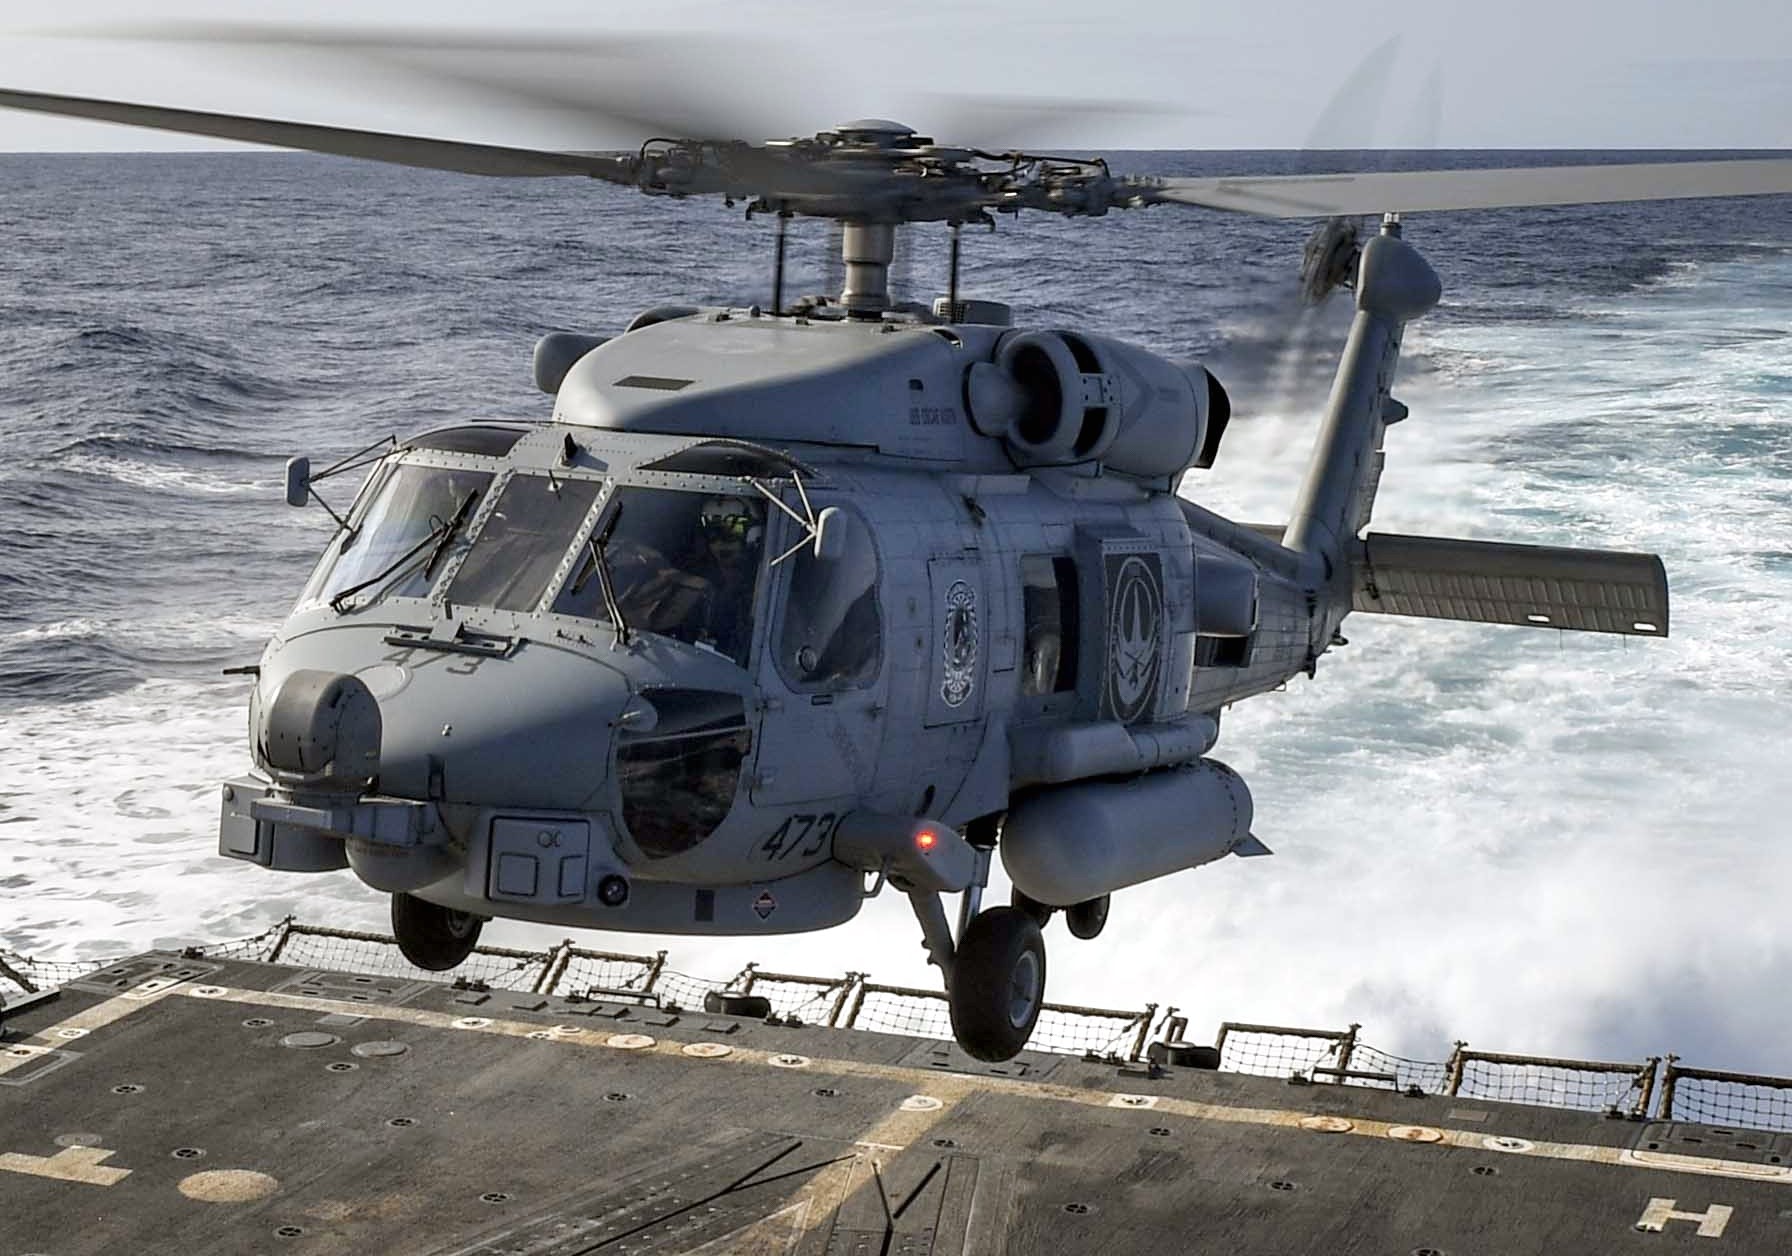 hsm-46 grandmasters helicopter maritime strike squadron mh-60r seahawk 2017 38 uss oscar austin ddg-79